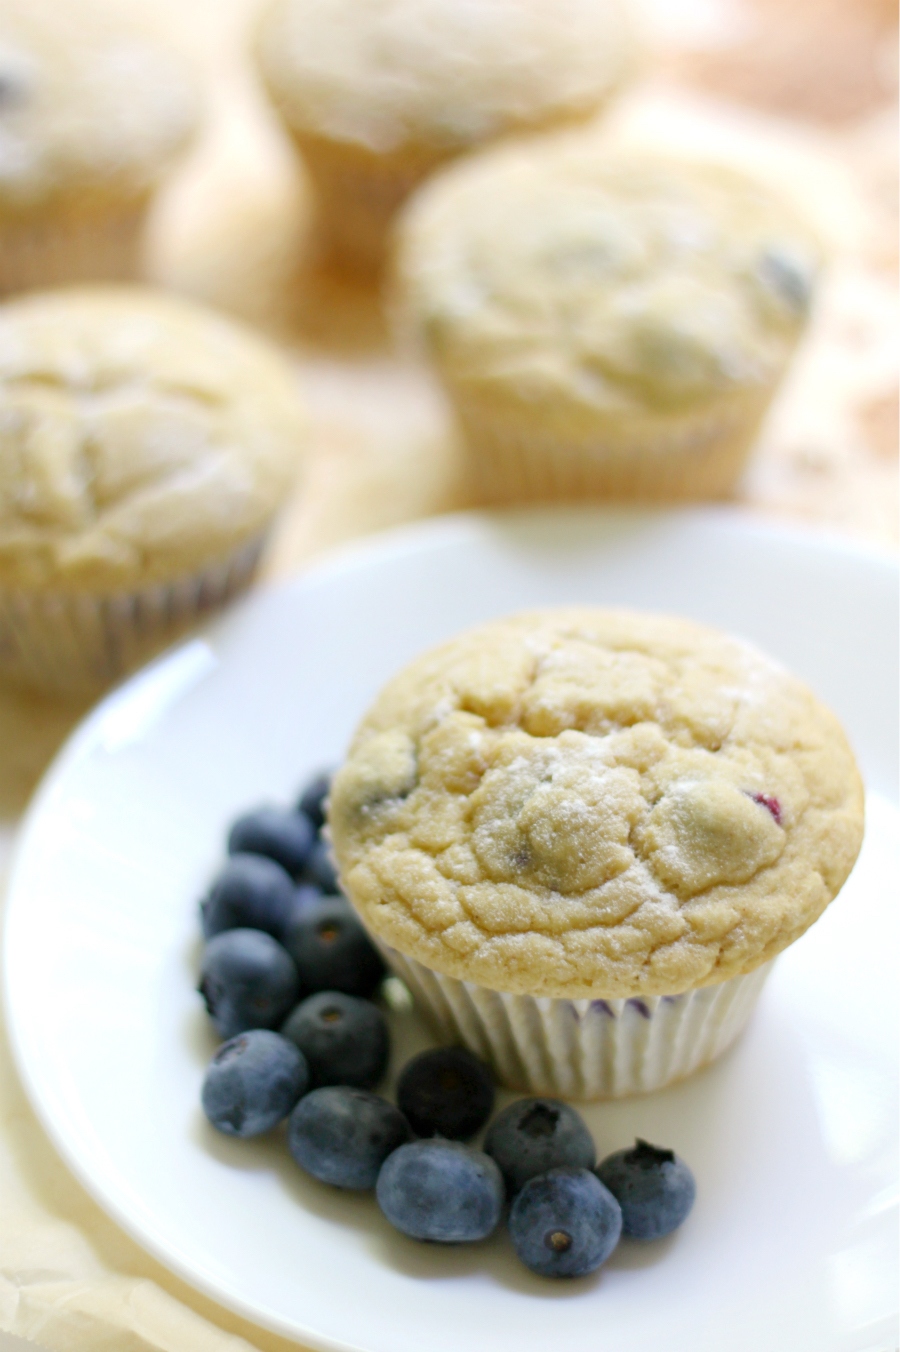 single bakery-style gluten-free blueberry muffin on plate